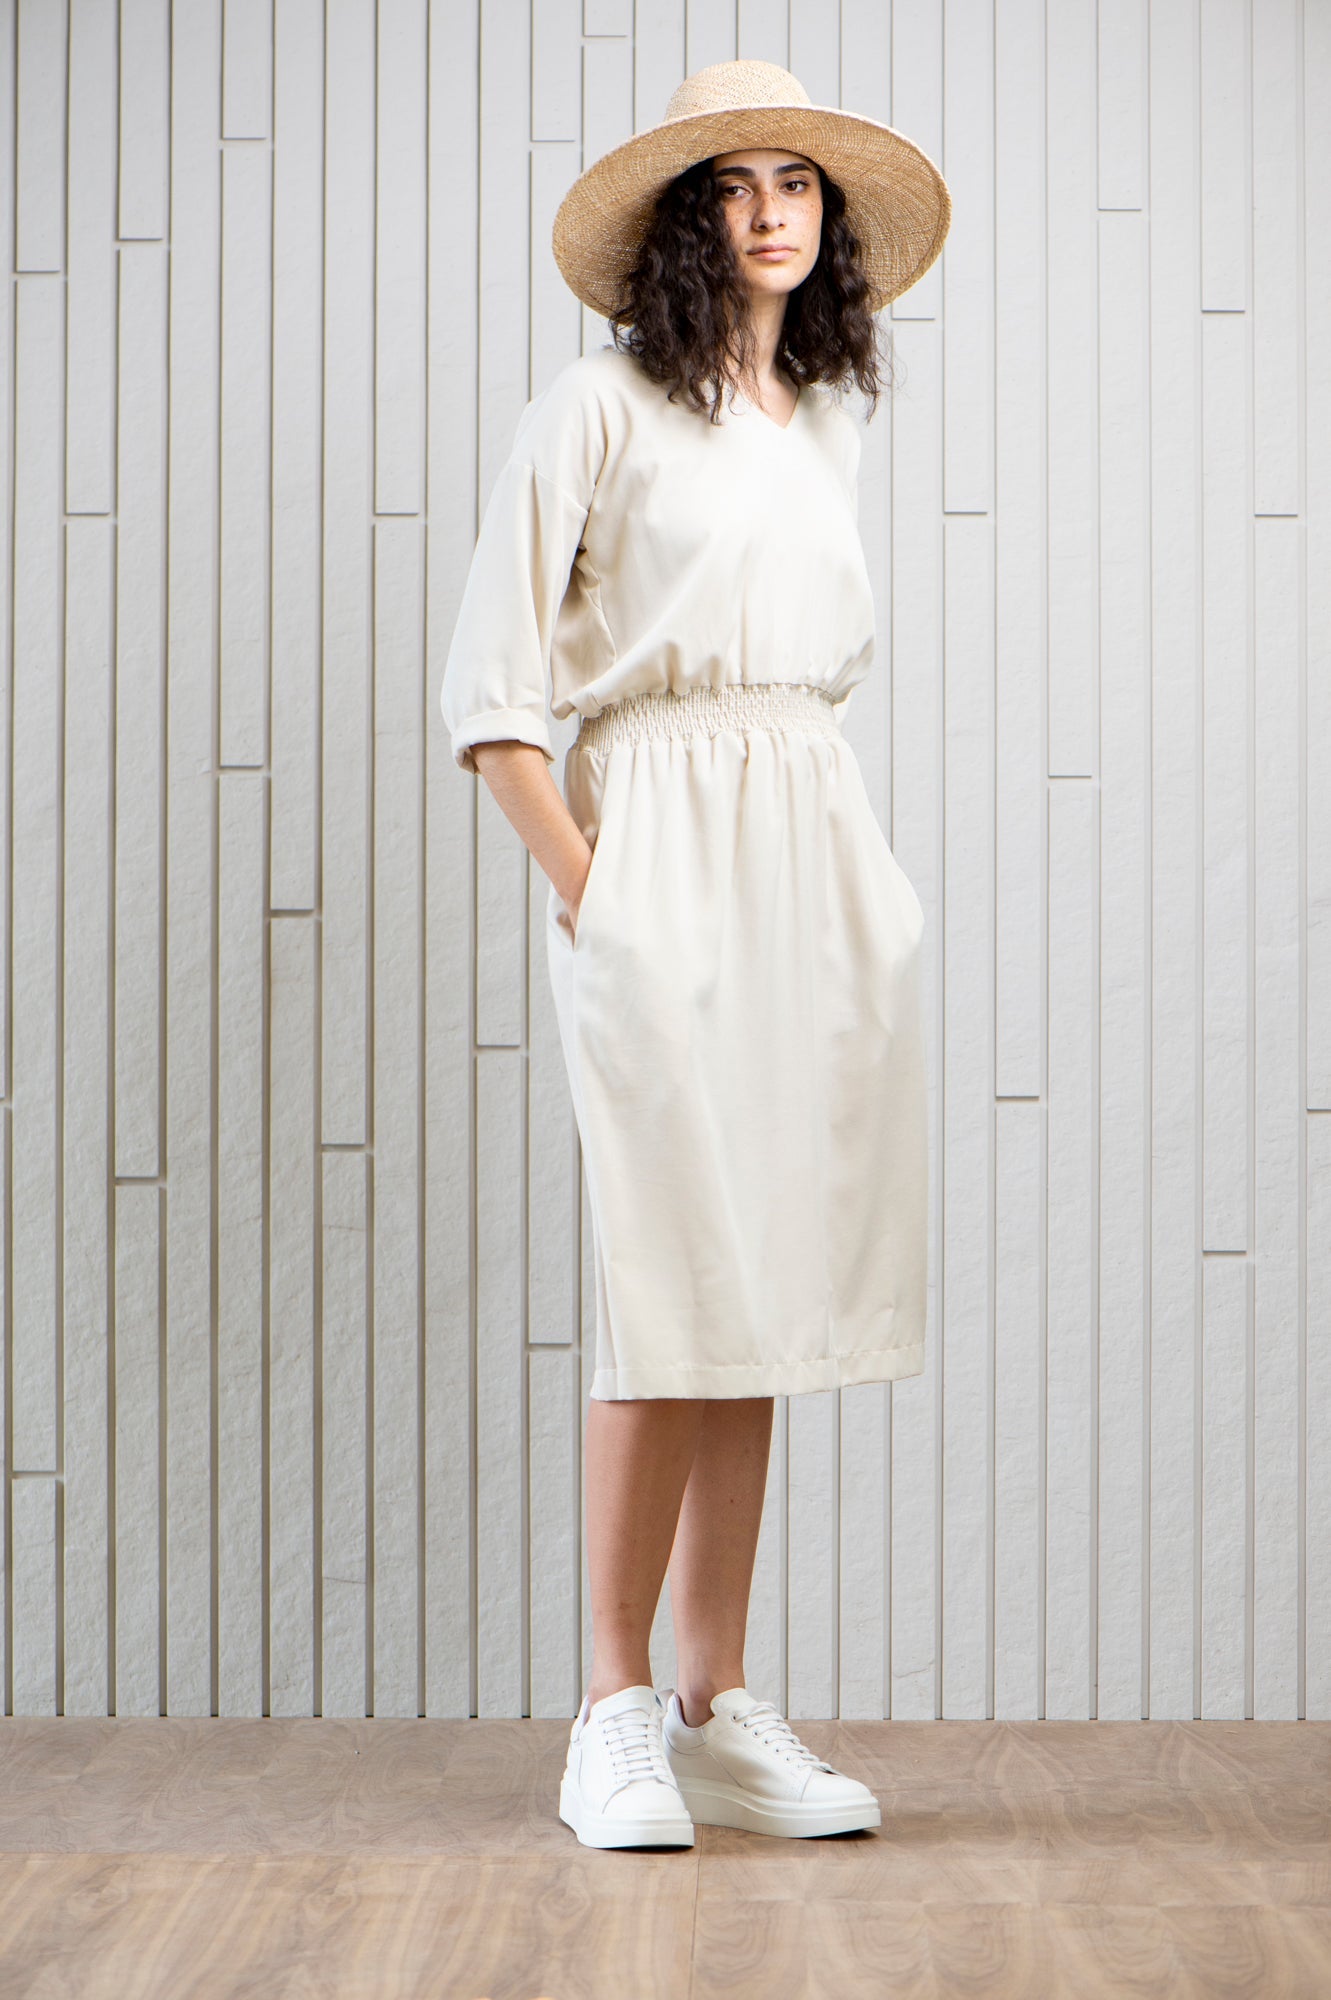 nassau-dress-tencel-Canadian-designer-pockets-white